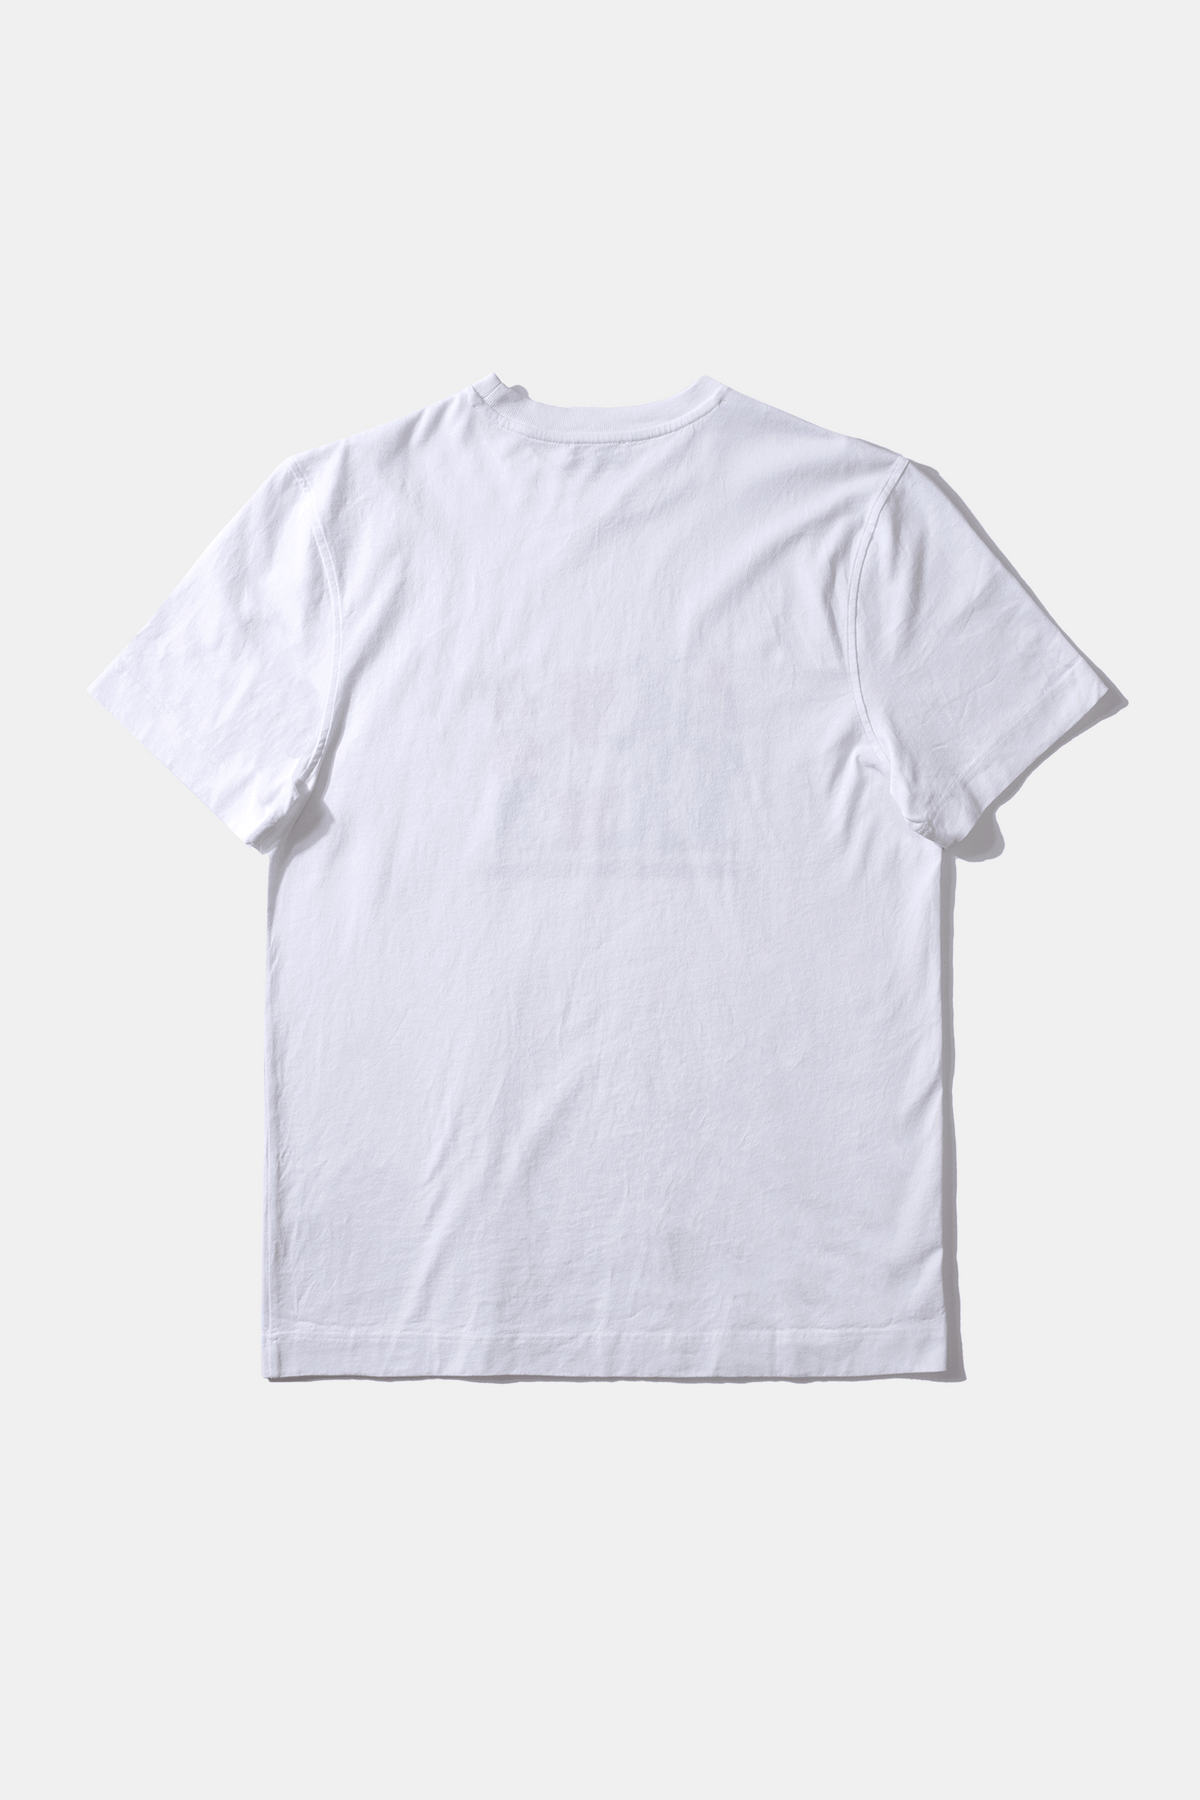 Buddies T-Shirt Plain White